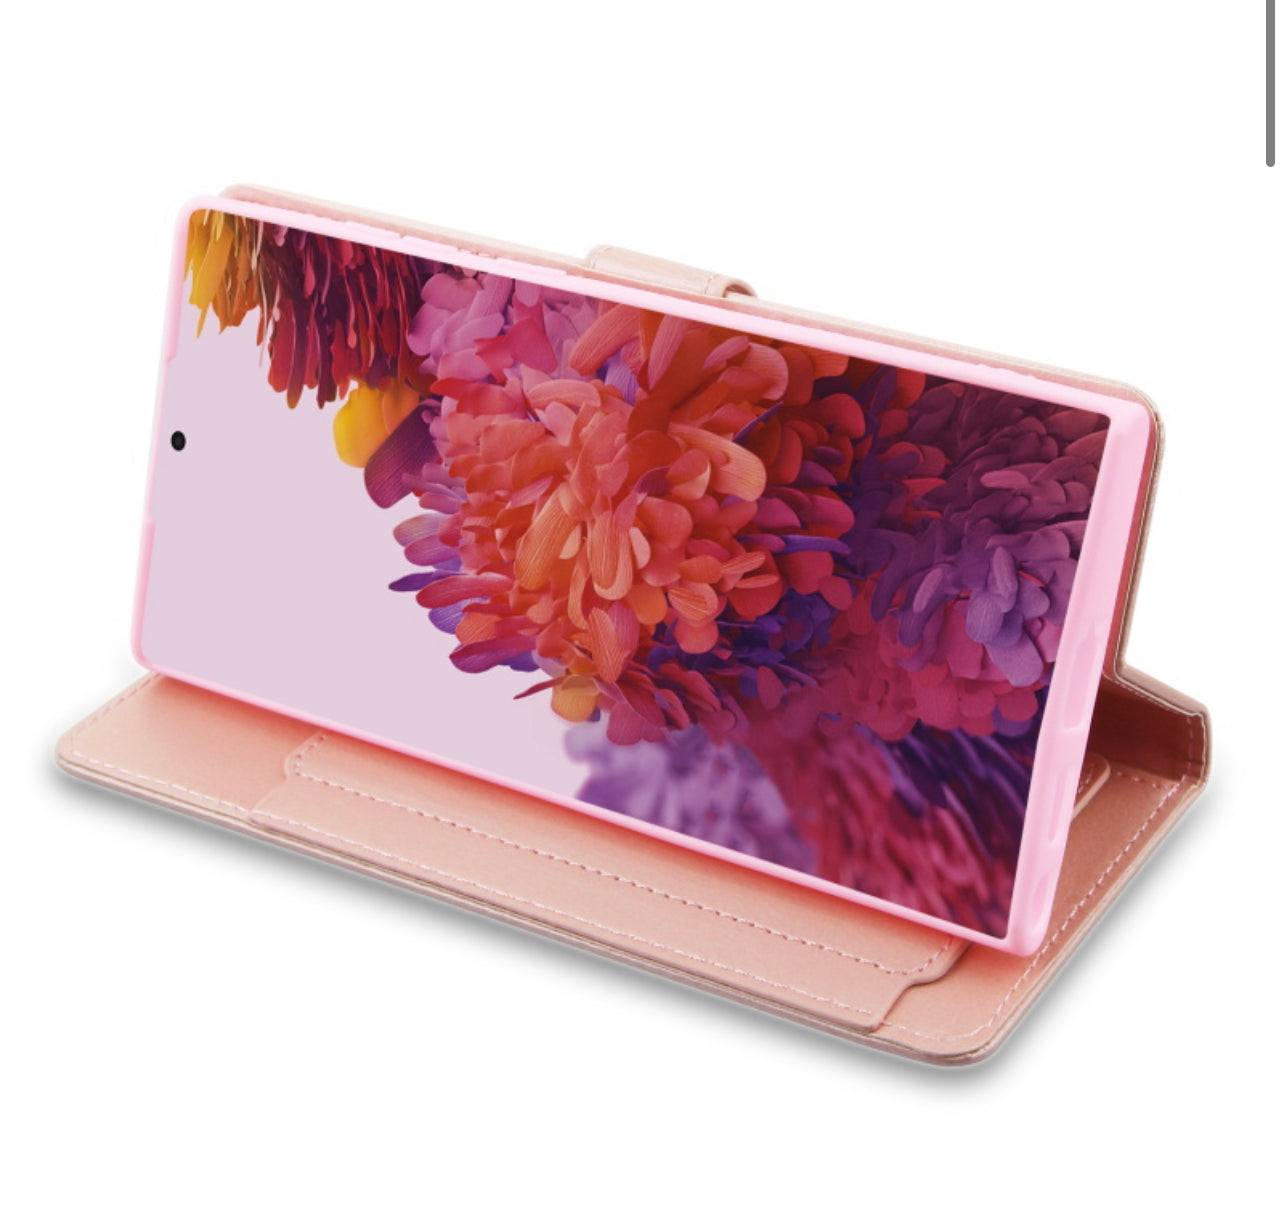 MyBat MyJacket Wallet Xtra Series for Samsung Galaxy S22 Ultra - Rose Gold